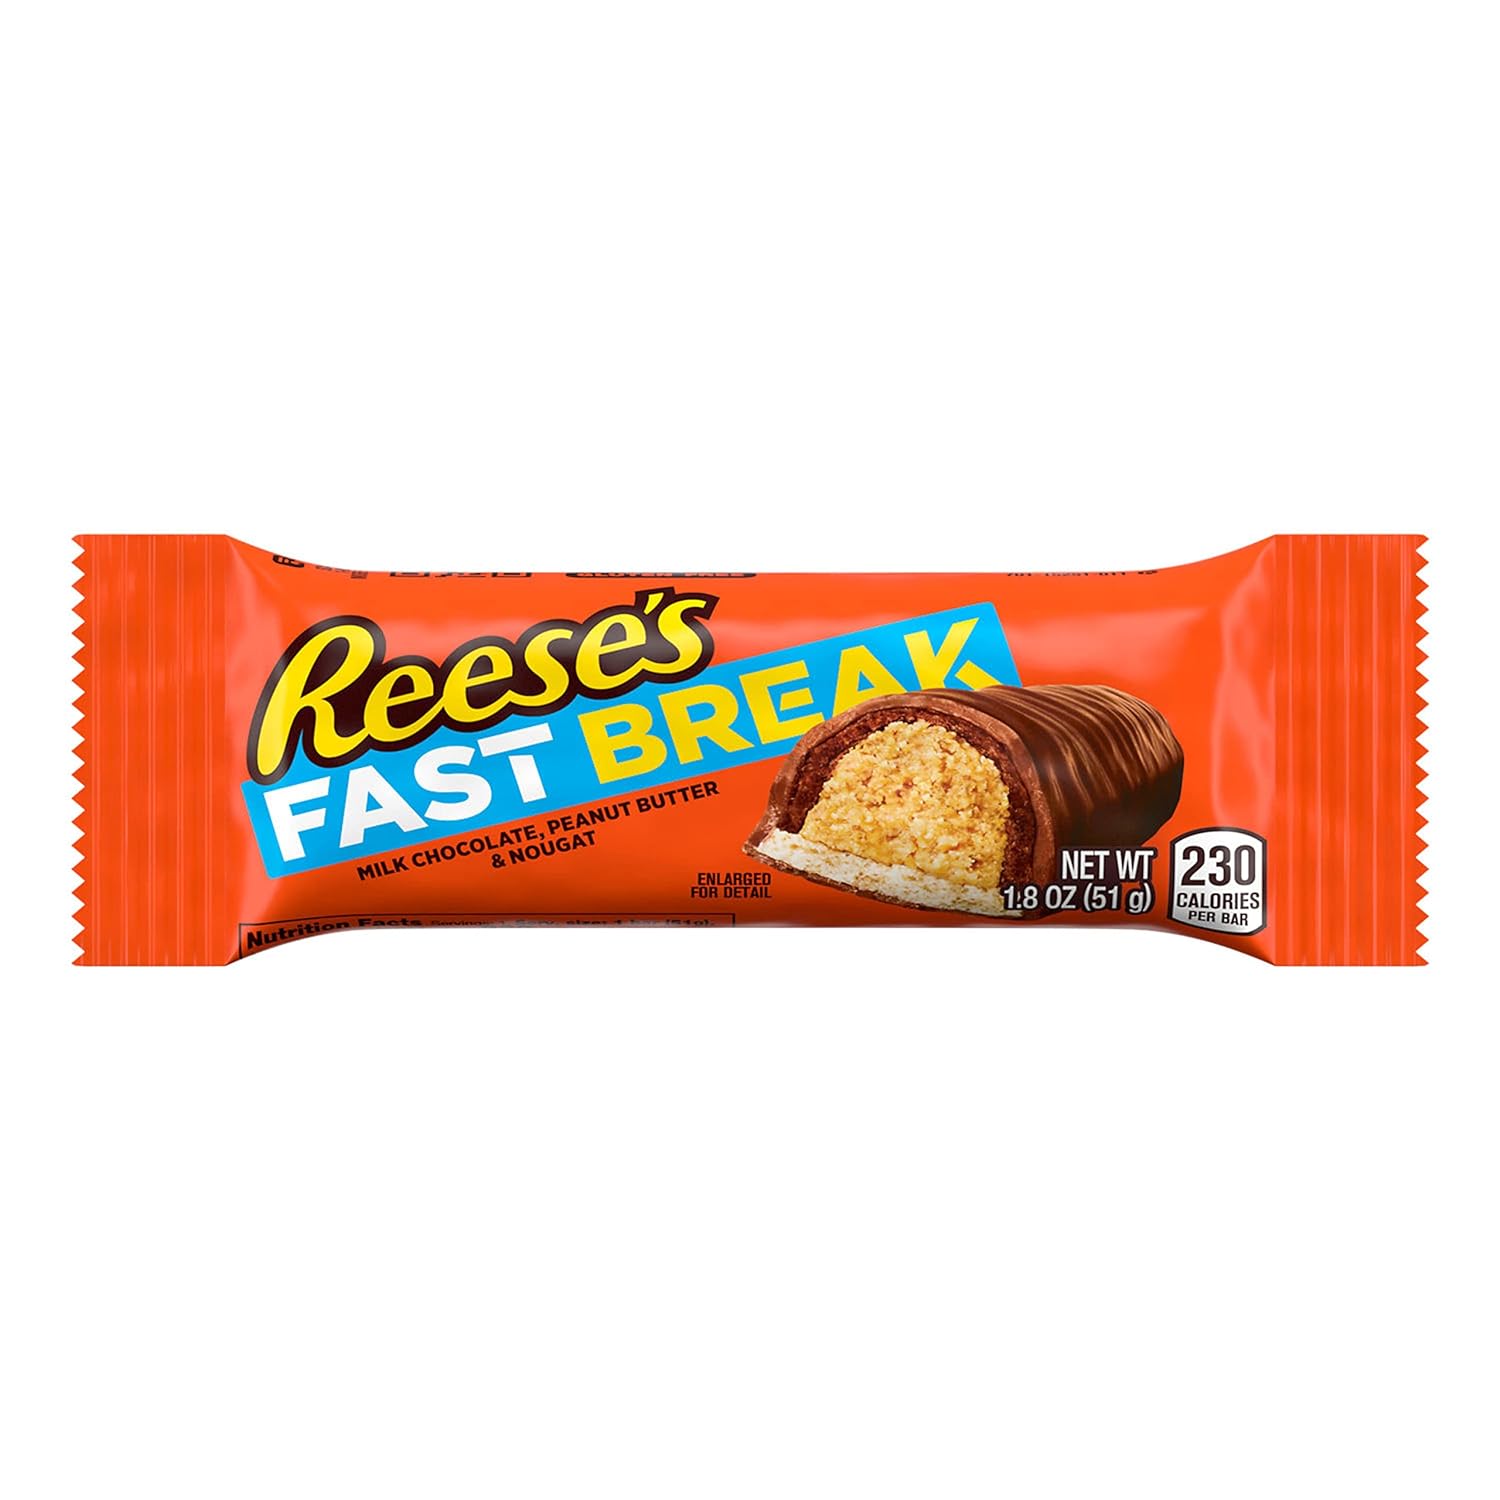 Reese's Fast Break 1.8 Oz Bar